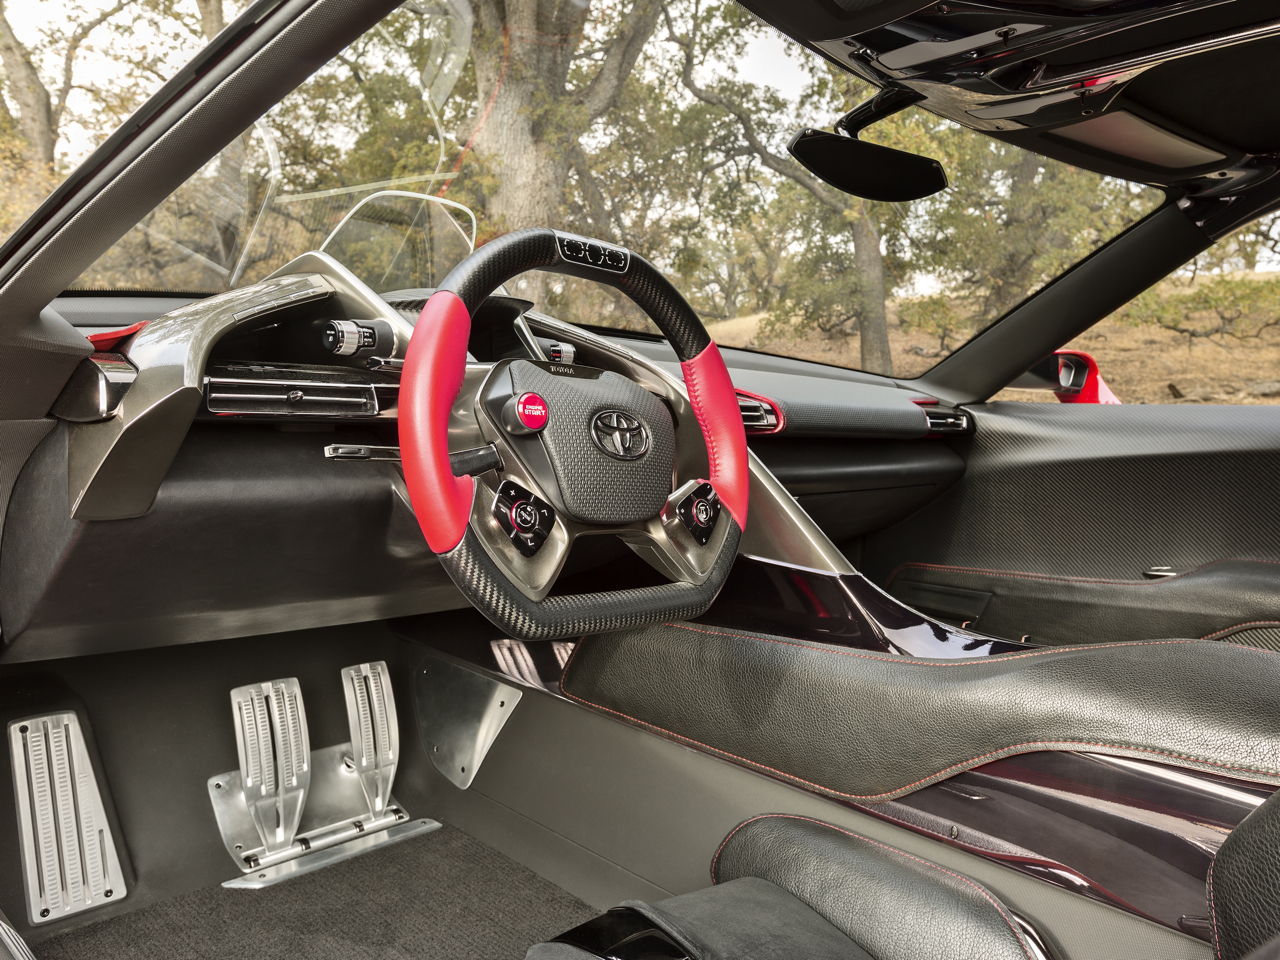 2014 Toyota Ft 1 Concept The New Supra Carsaddiction Com